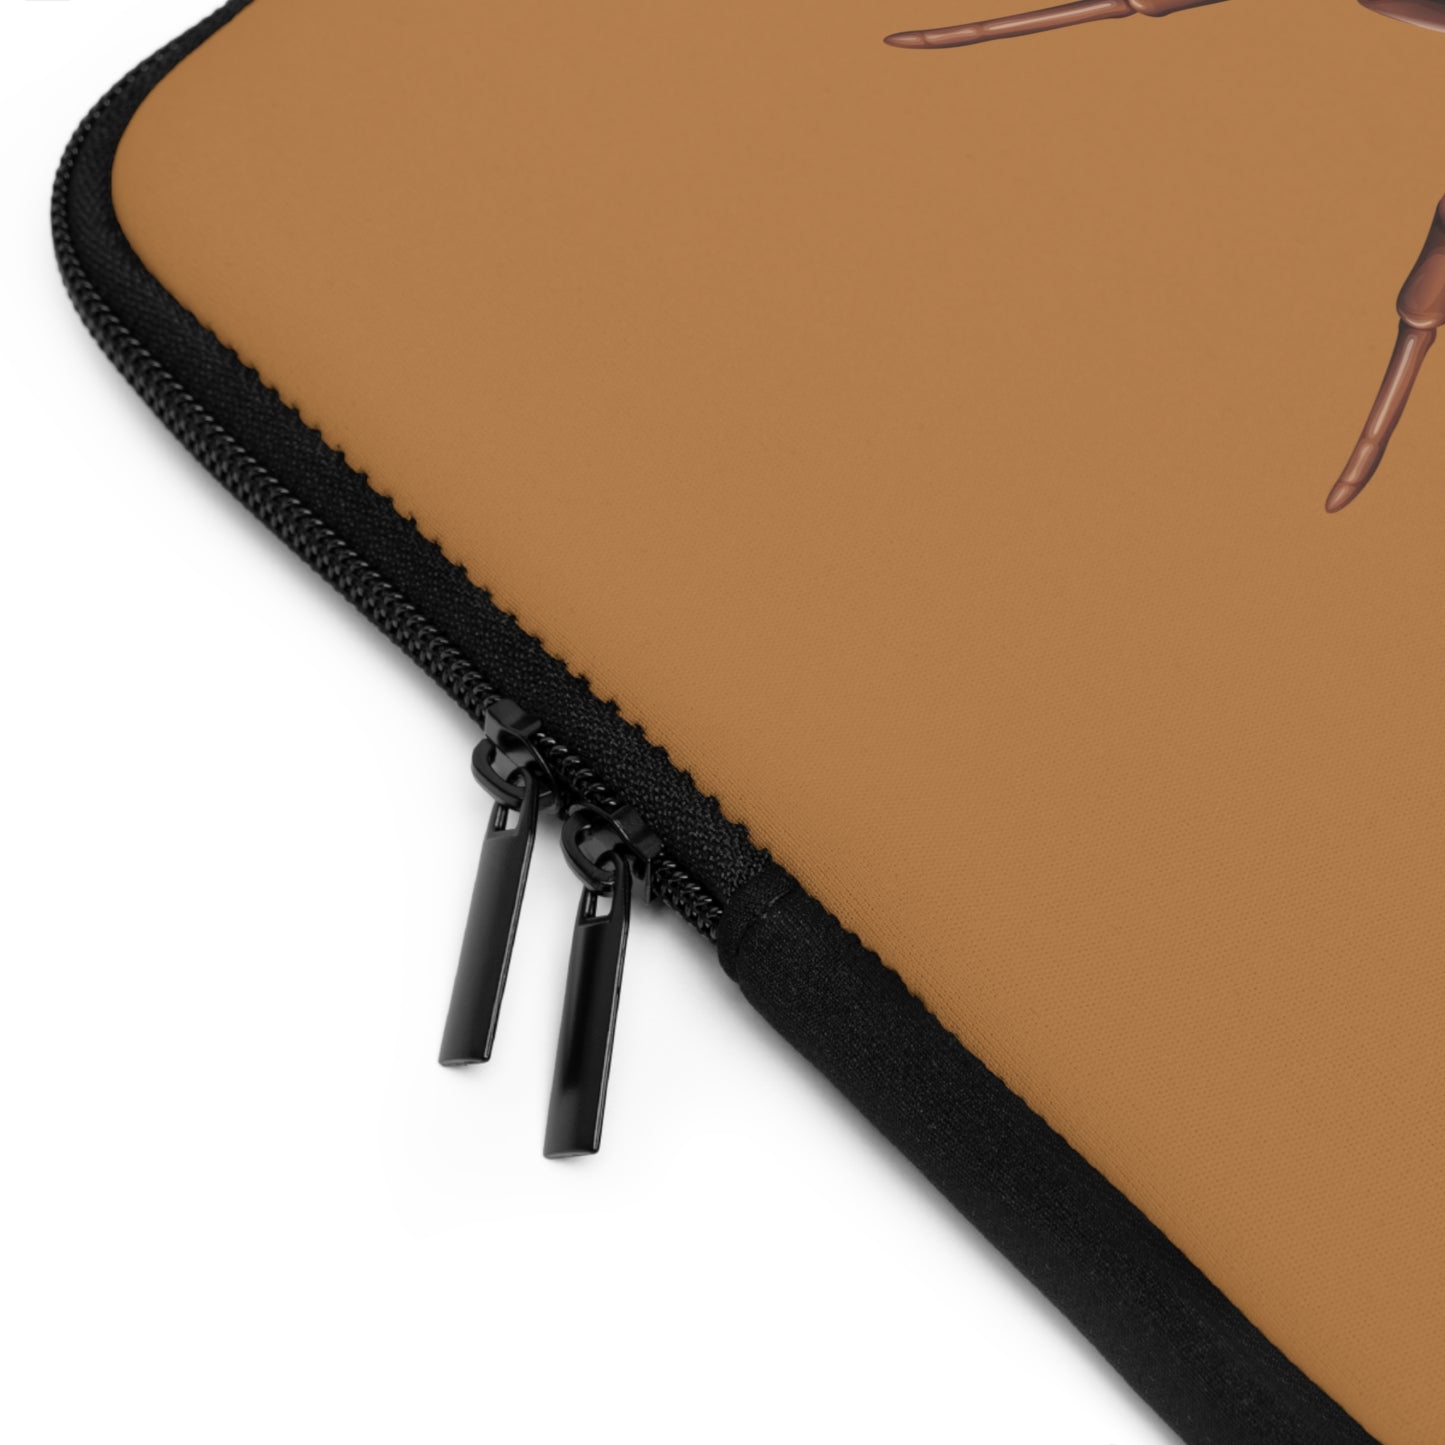 Big Brown Spider Laptop Sleeve